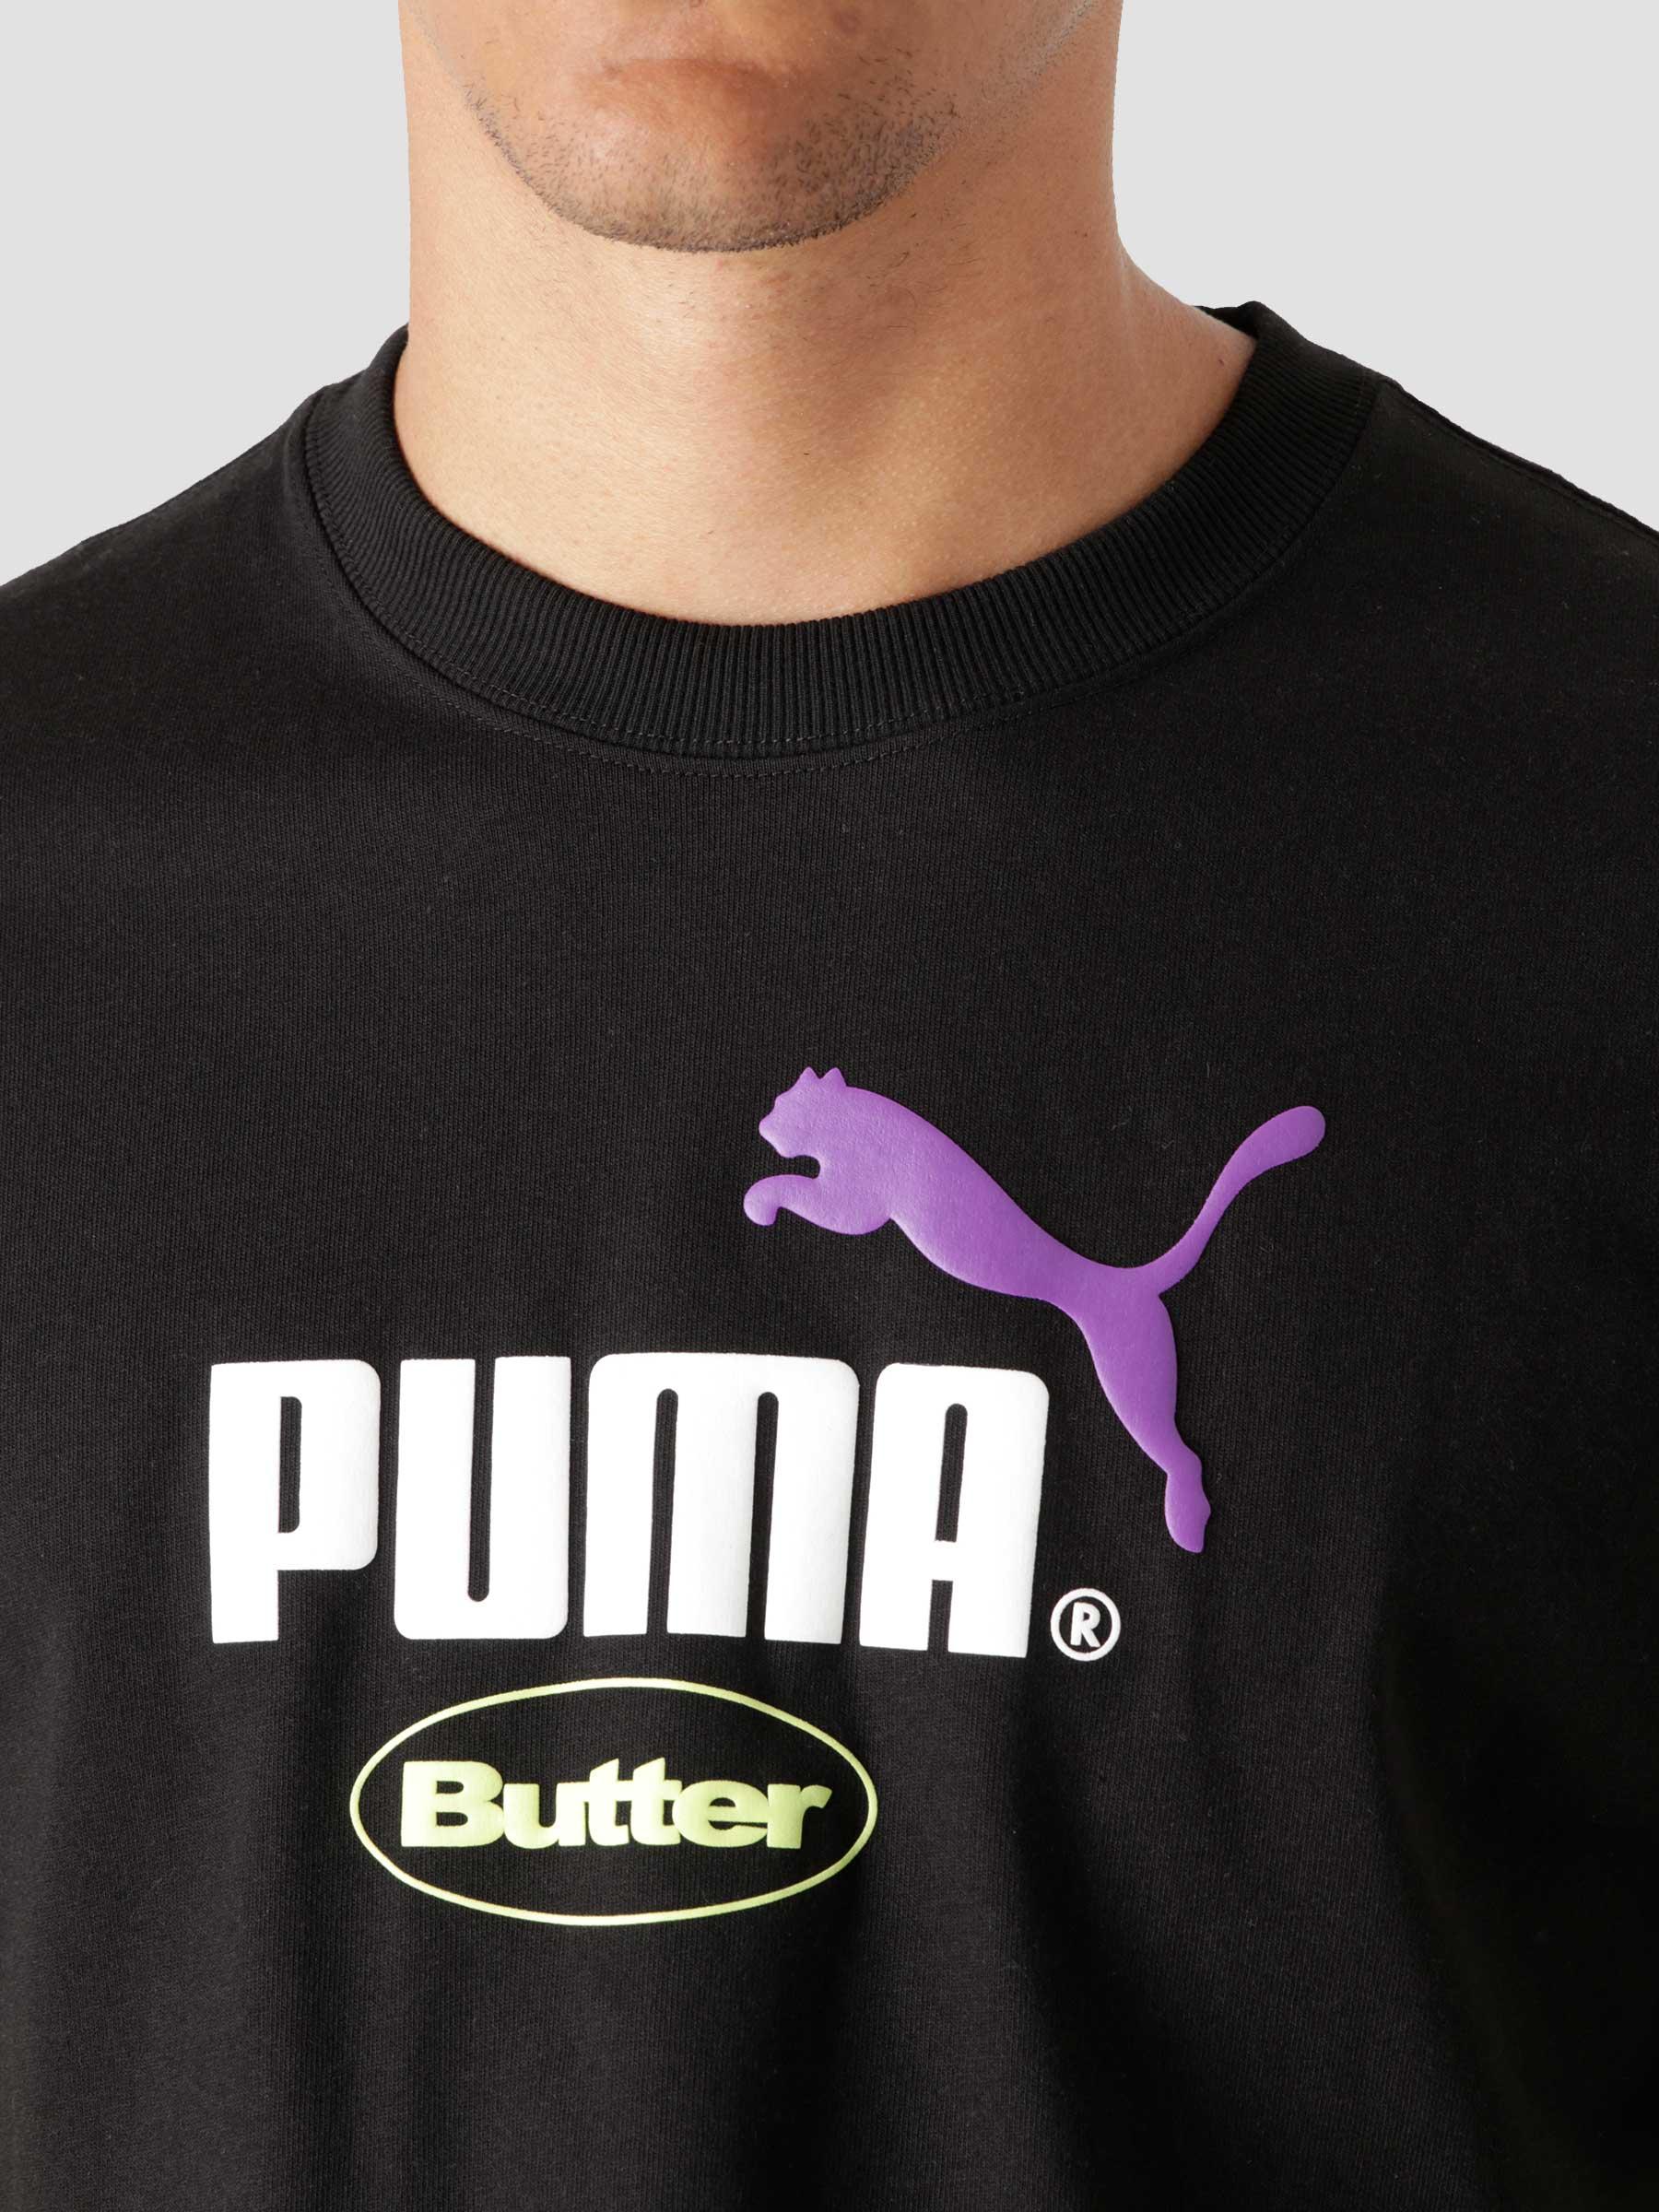 Puma X Butter Goods Graphic T Shirt Puma Black 53244251